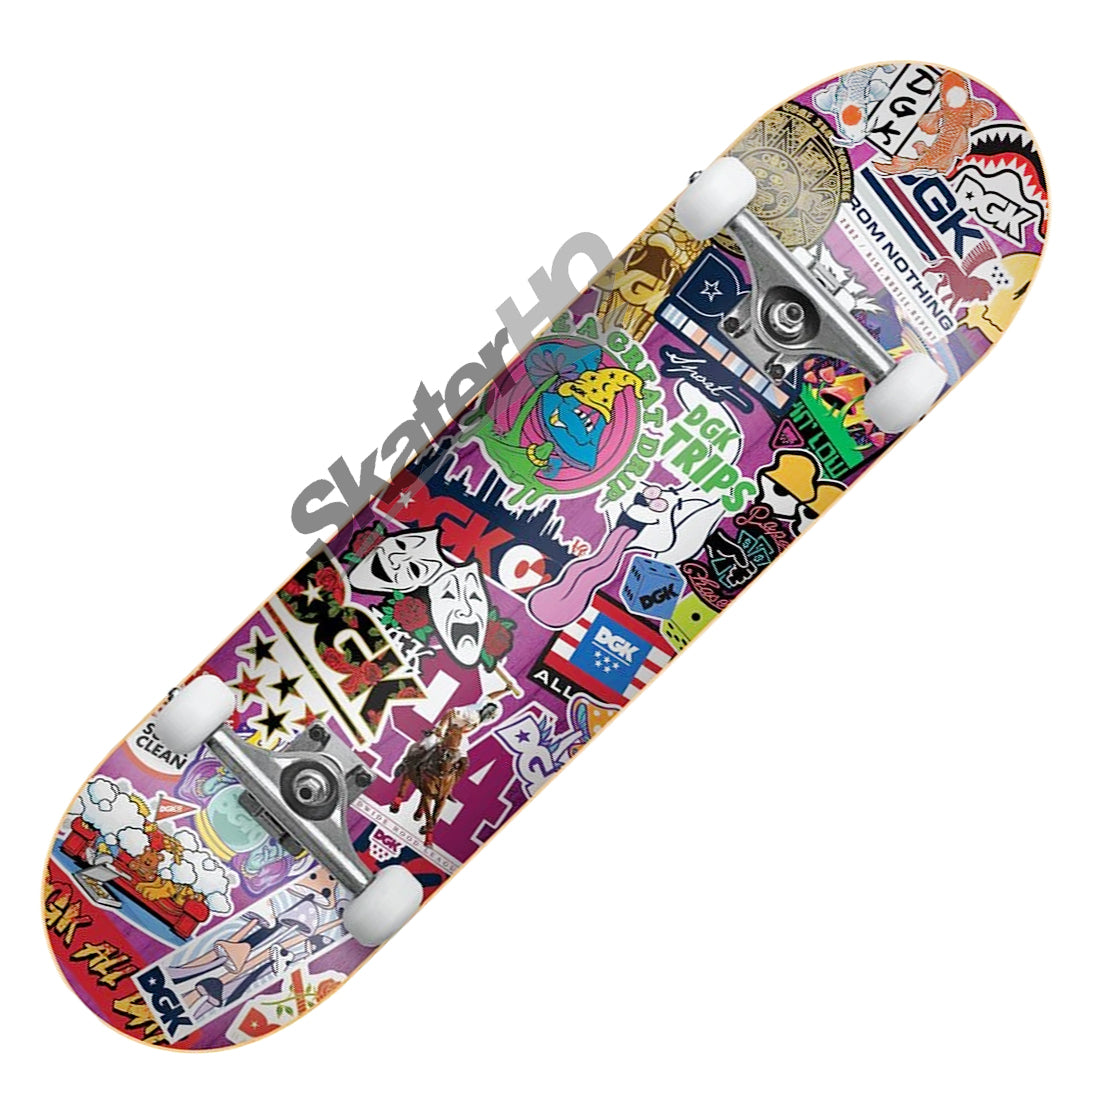 DGK Stix 7.5 Complete - Pink Skateboard Completes Modern Street